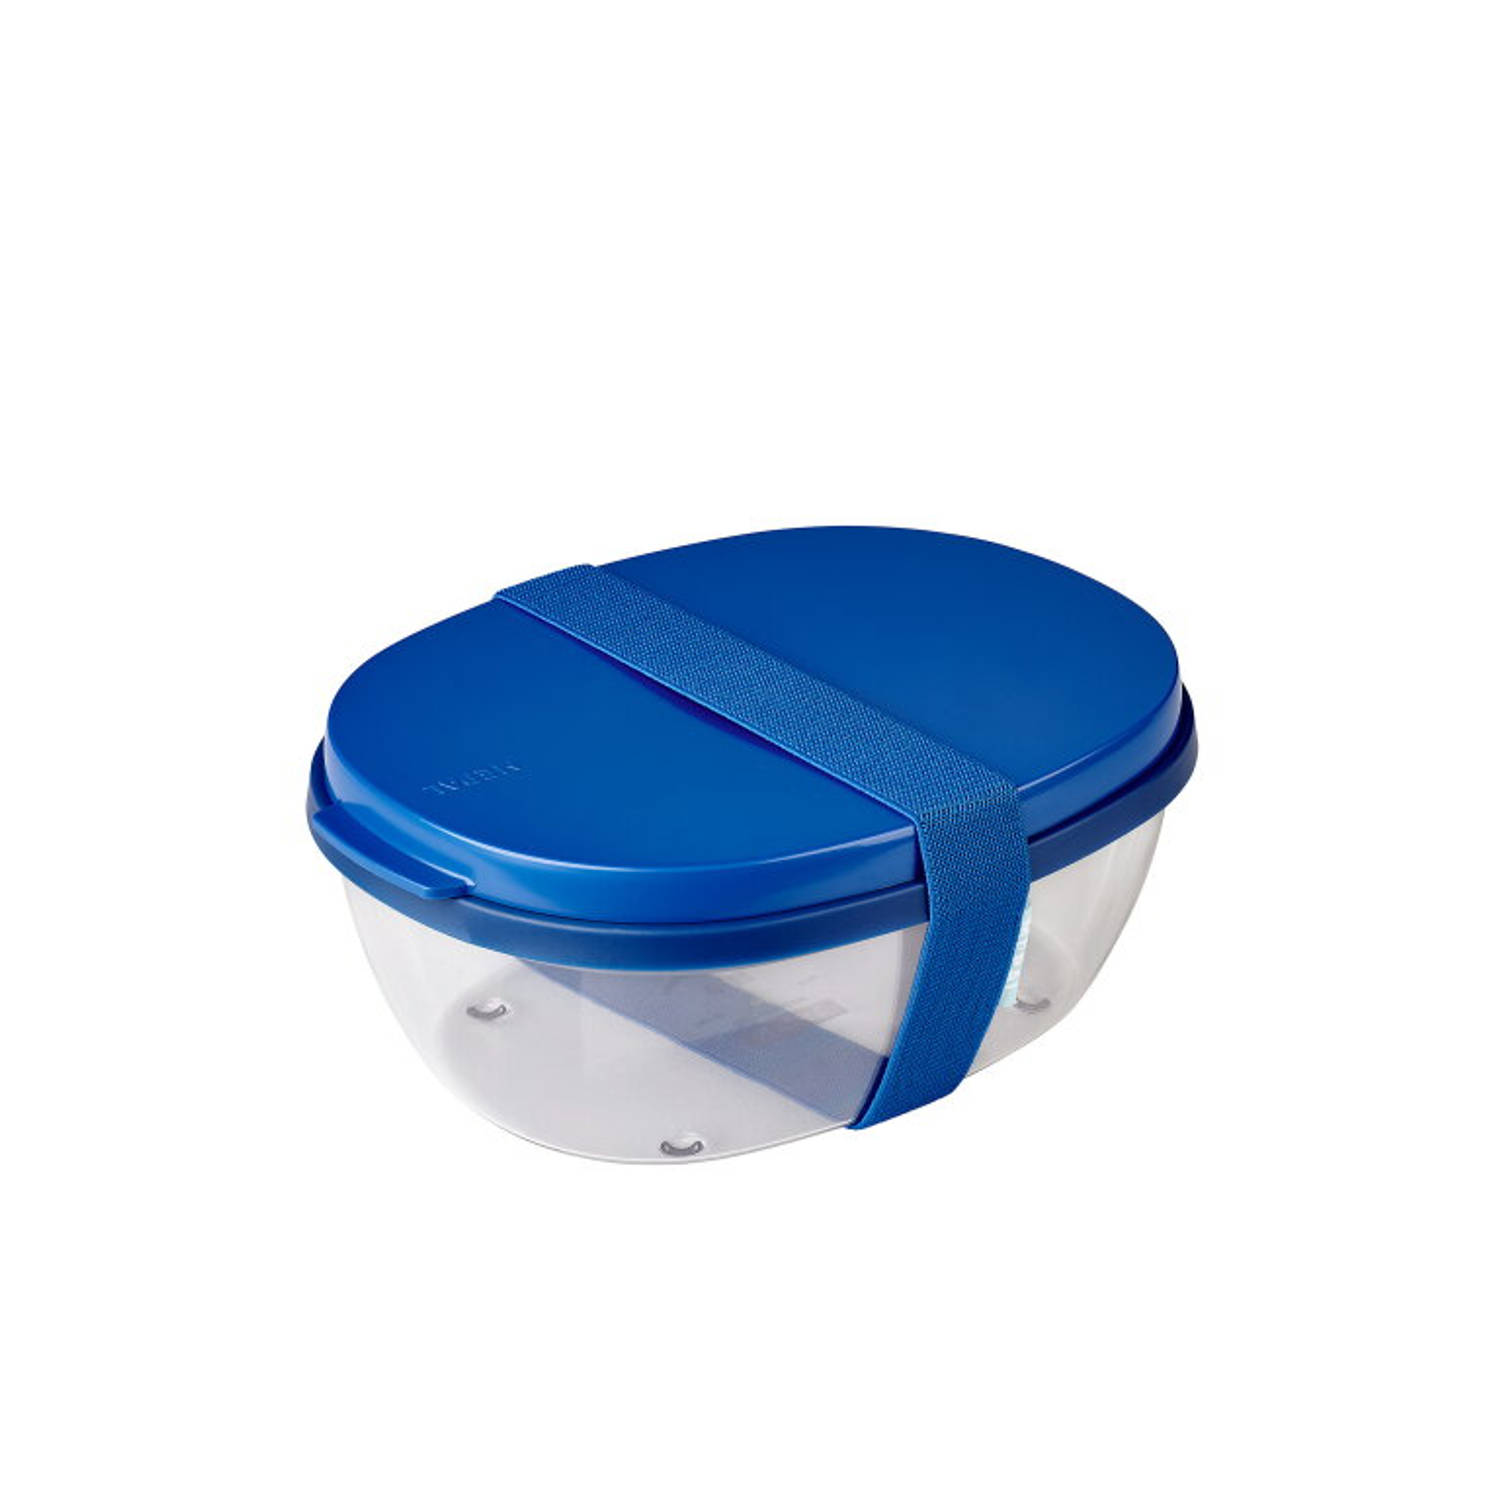 Mepal - Ellipse lunchbox - 1425 ml - Saladebox - Vivid blue